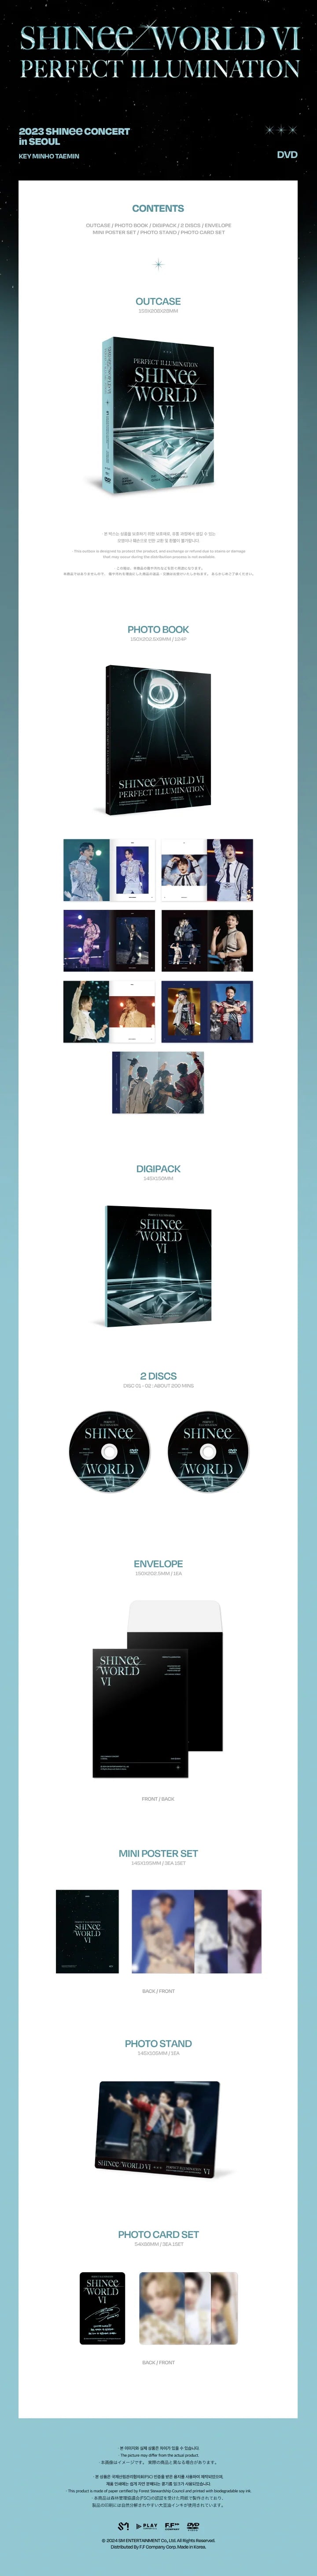 SHINee - WORLD VI PERFECT ILLUMINATION in SEOUL DVD Infographic